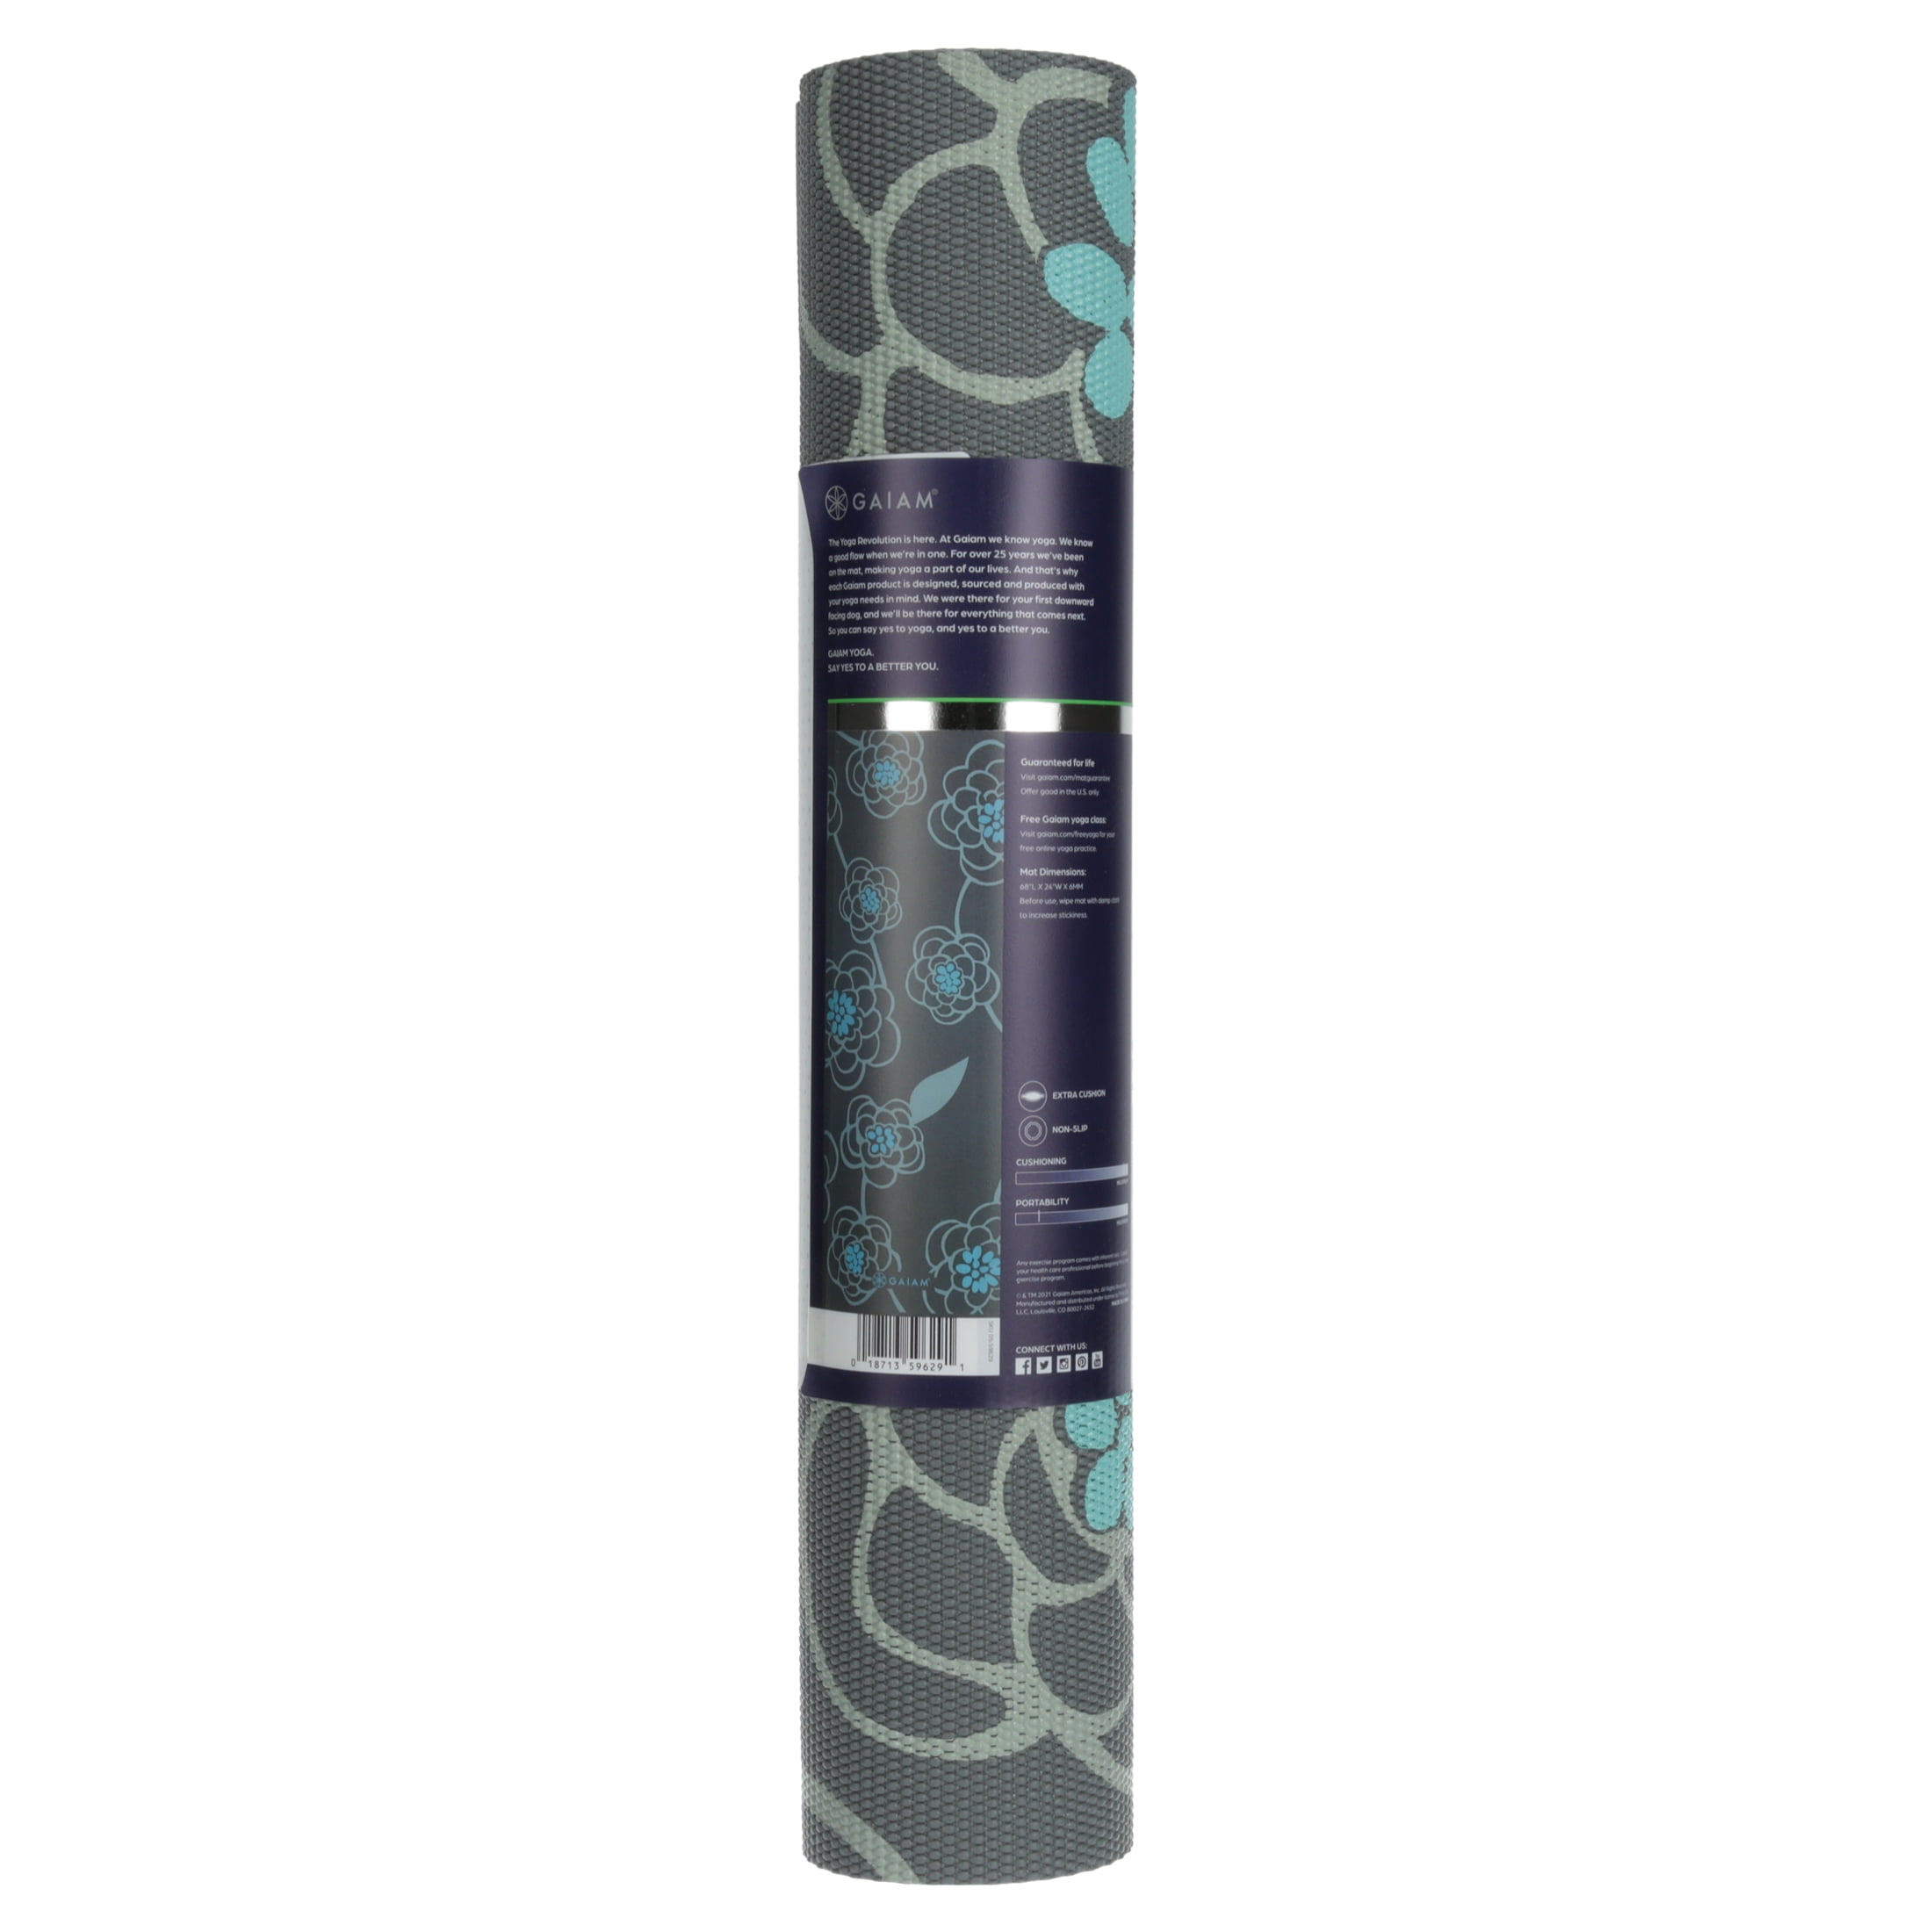 Gaiam Premium Lilac Feathers Yoga Mat (6mm) - ShopStyle Workout Accessories